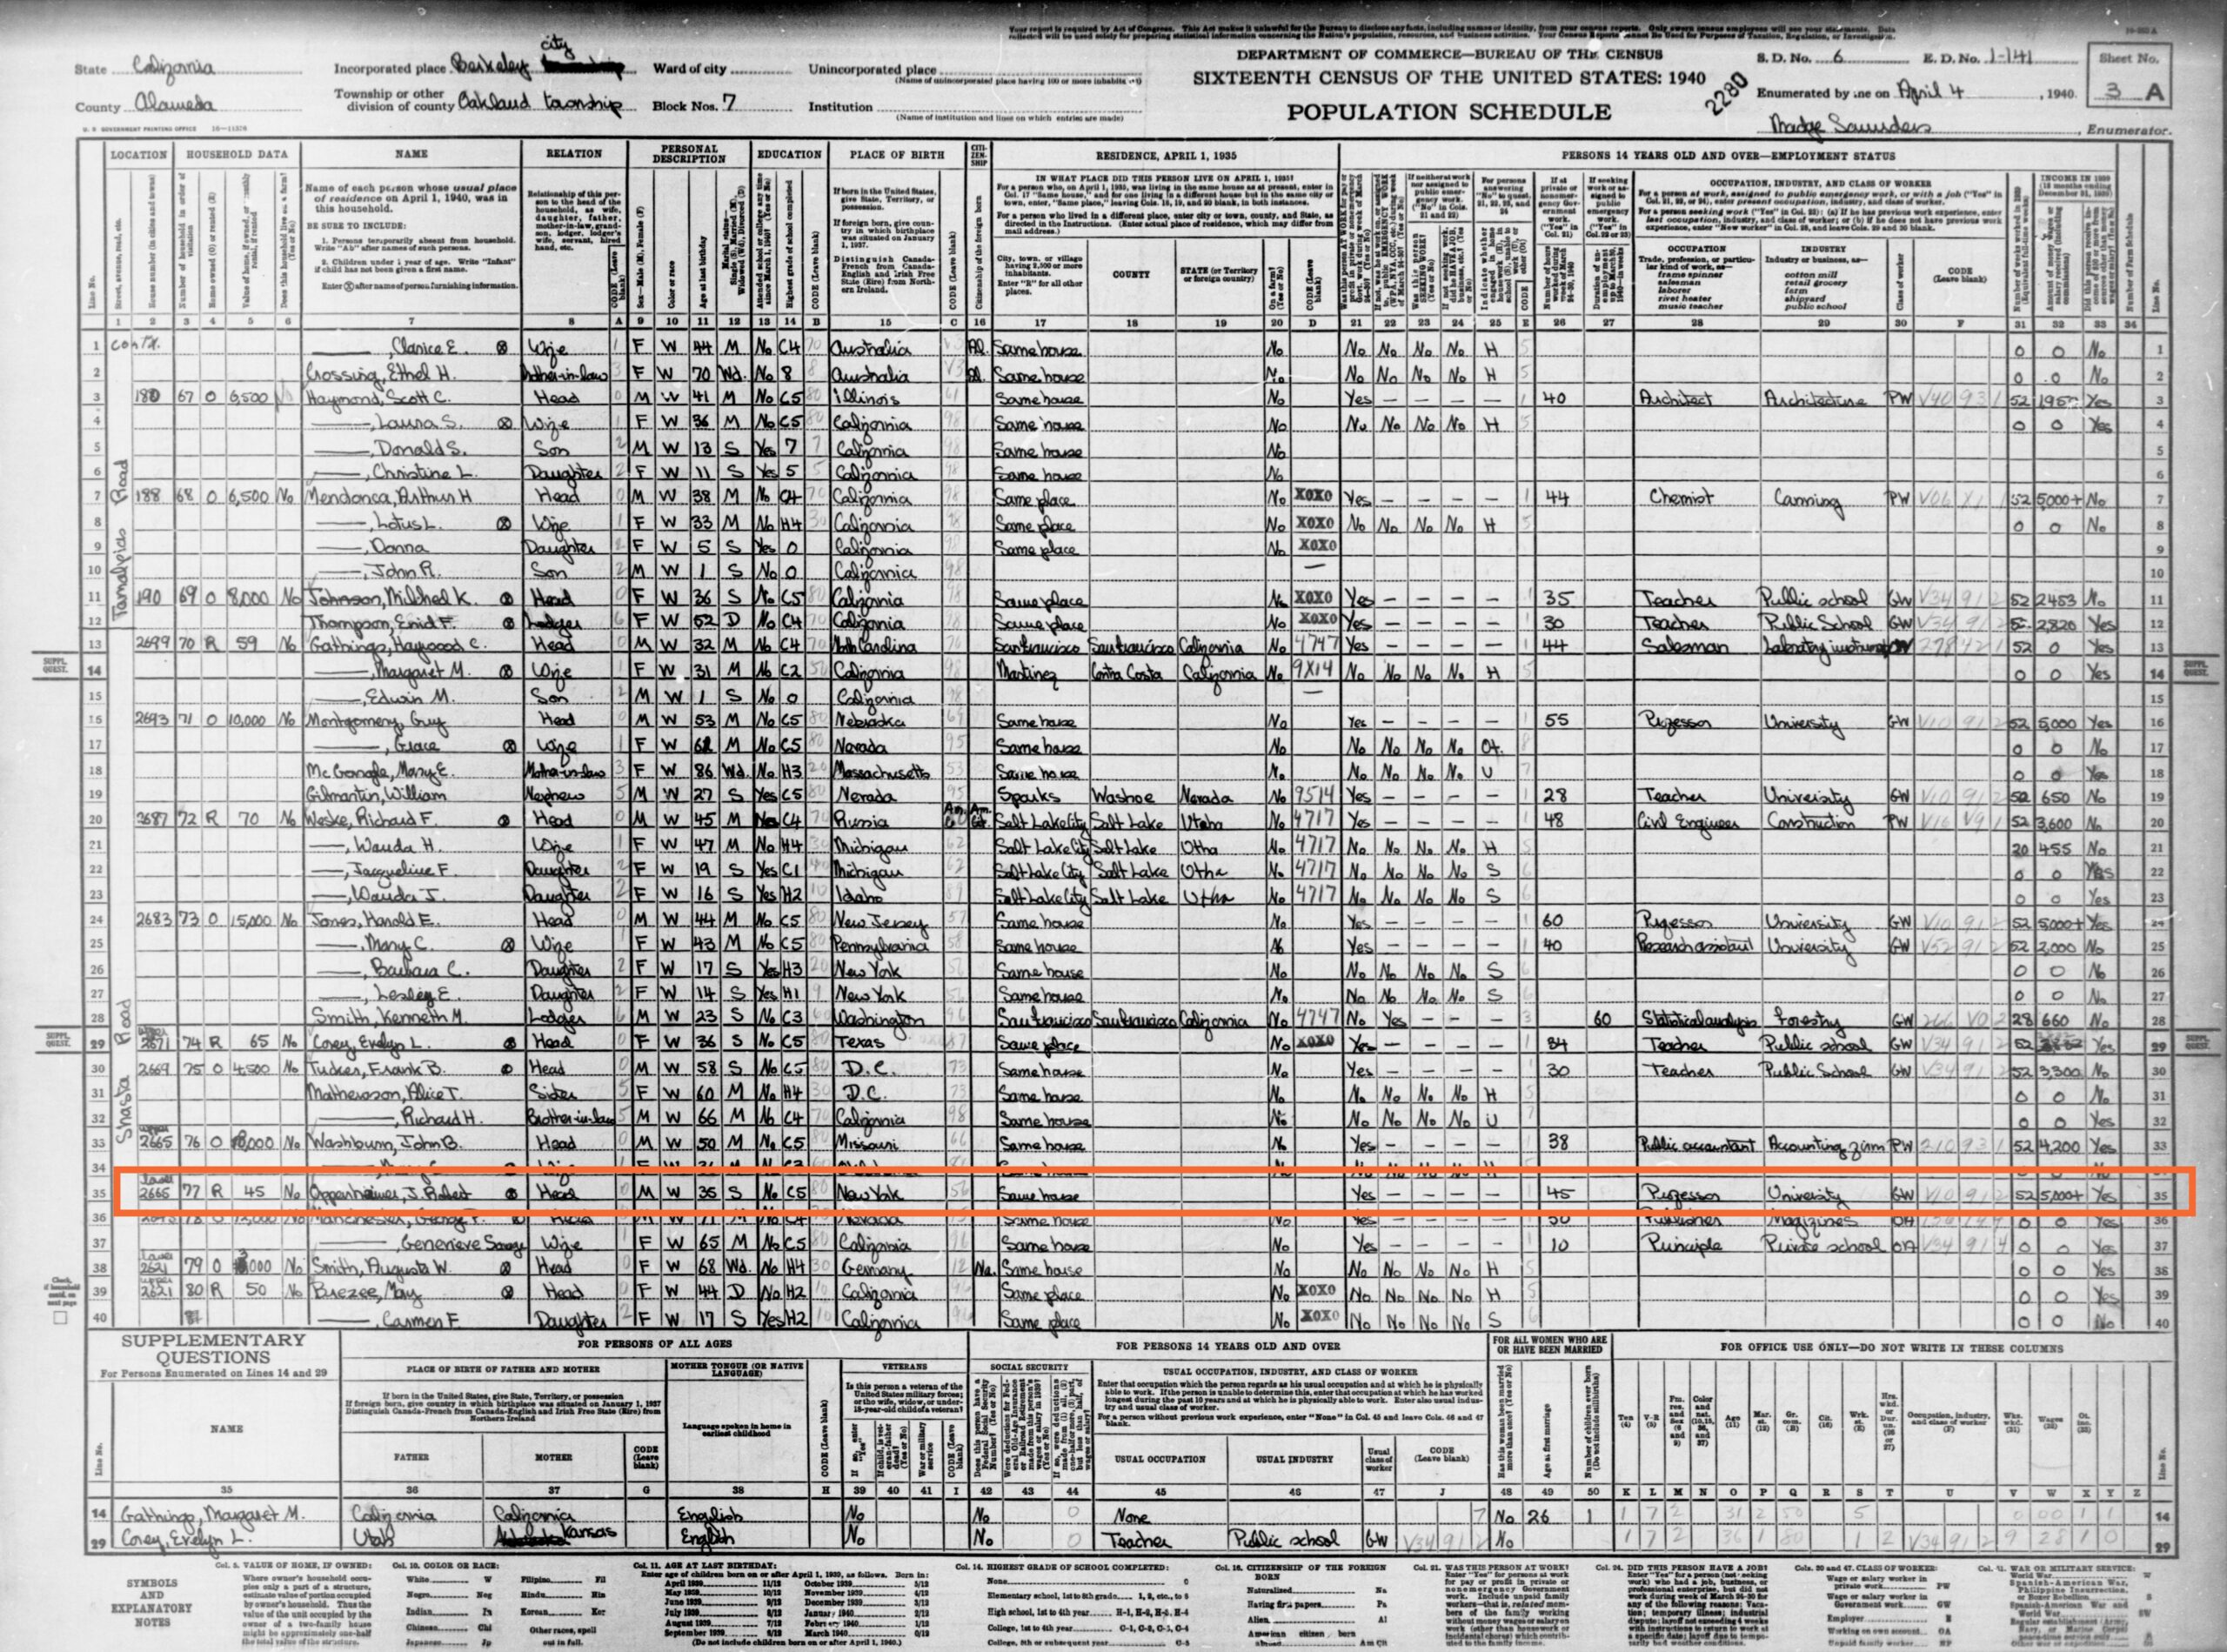 J. Robert Oppenheimer listed in the 1940 U.S. Census as a University Professor in Berkeley